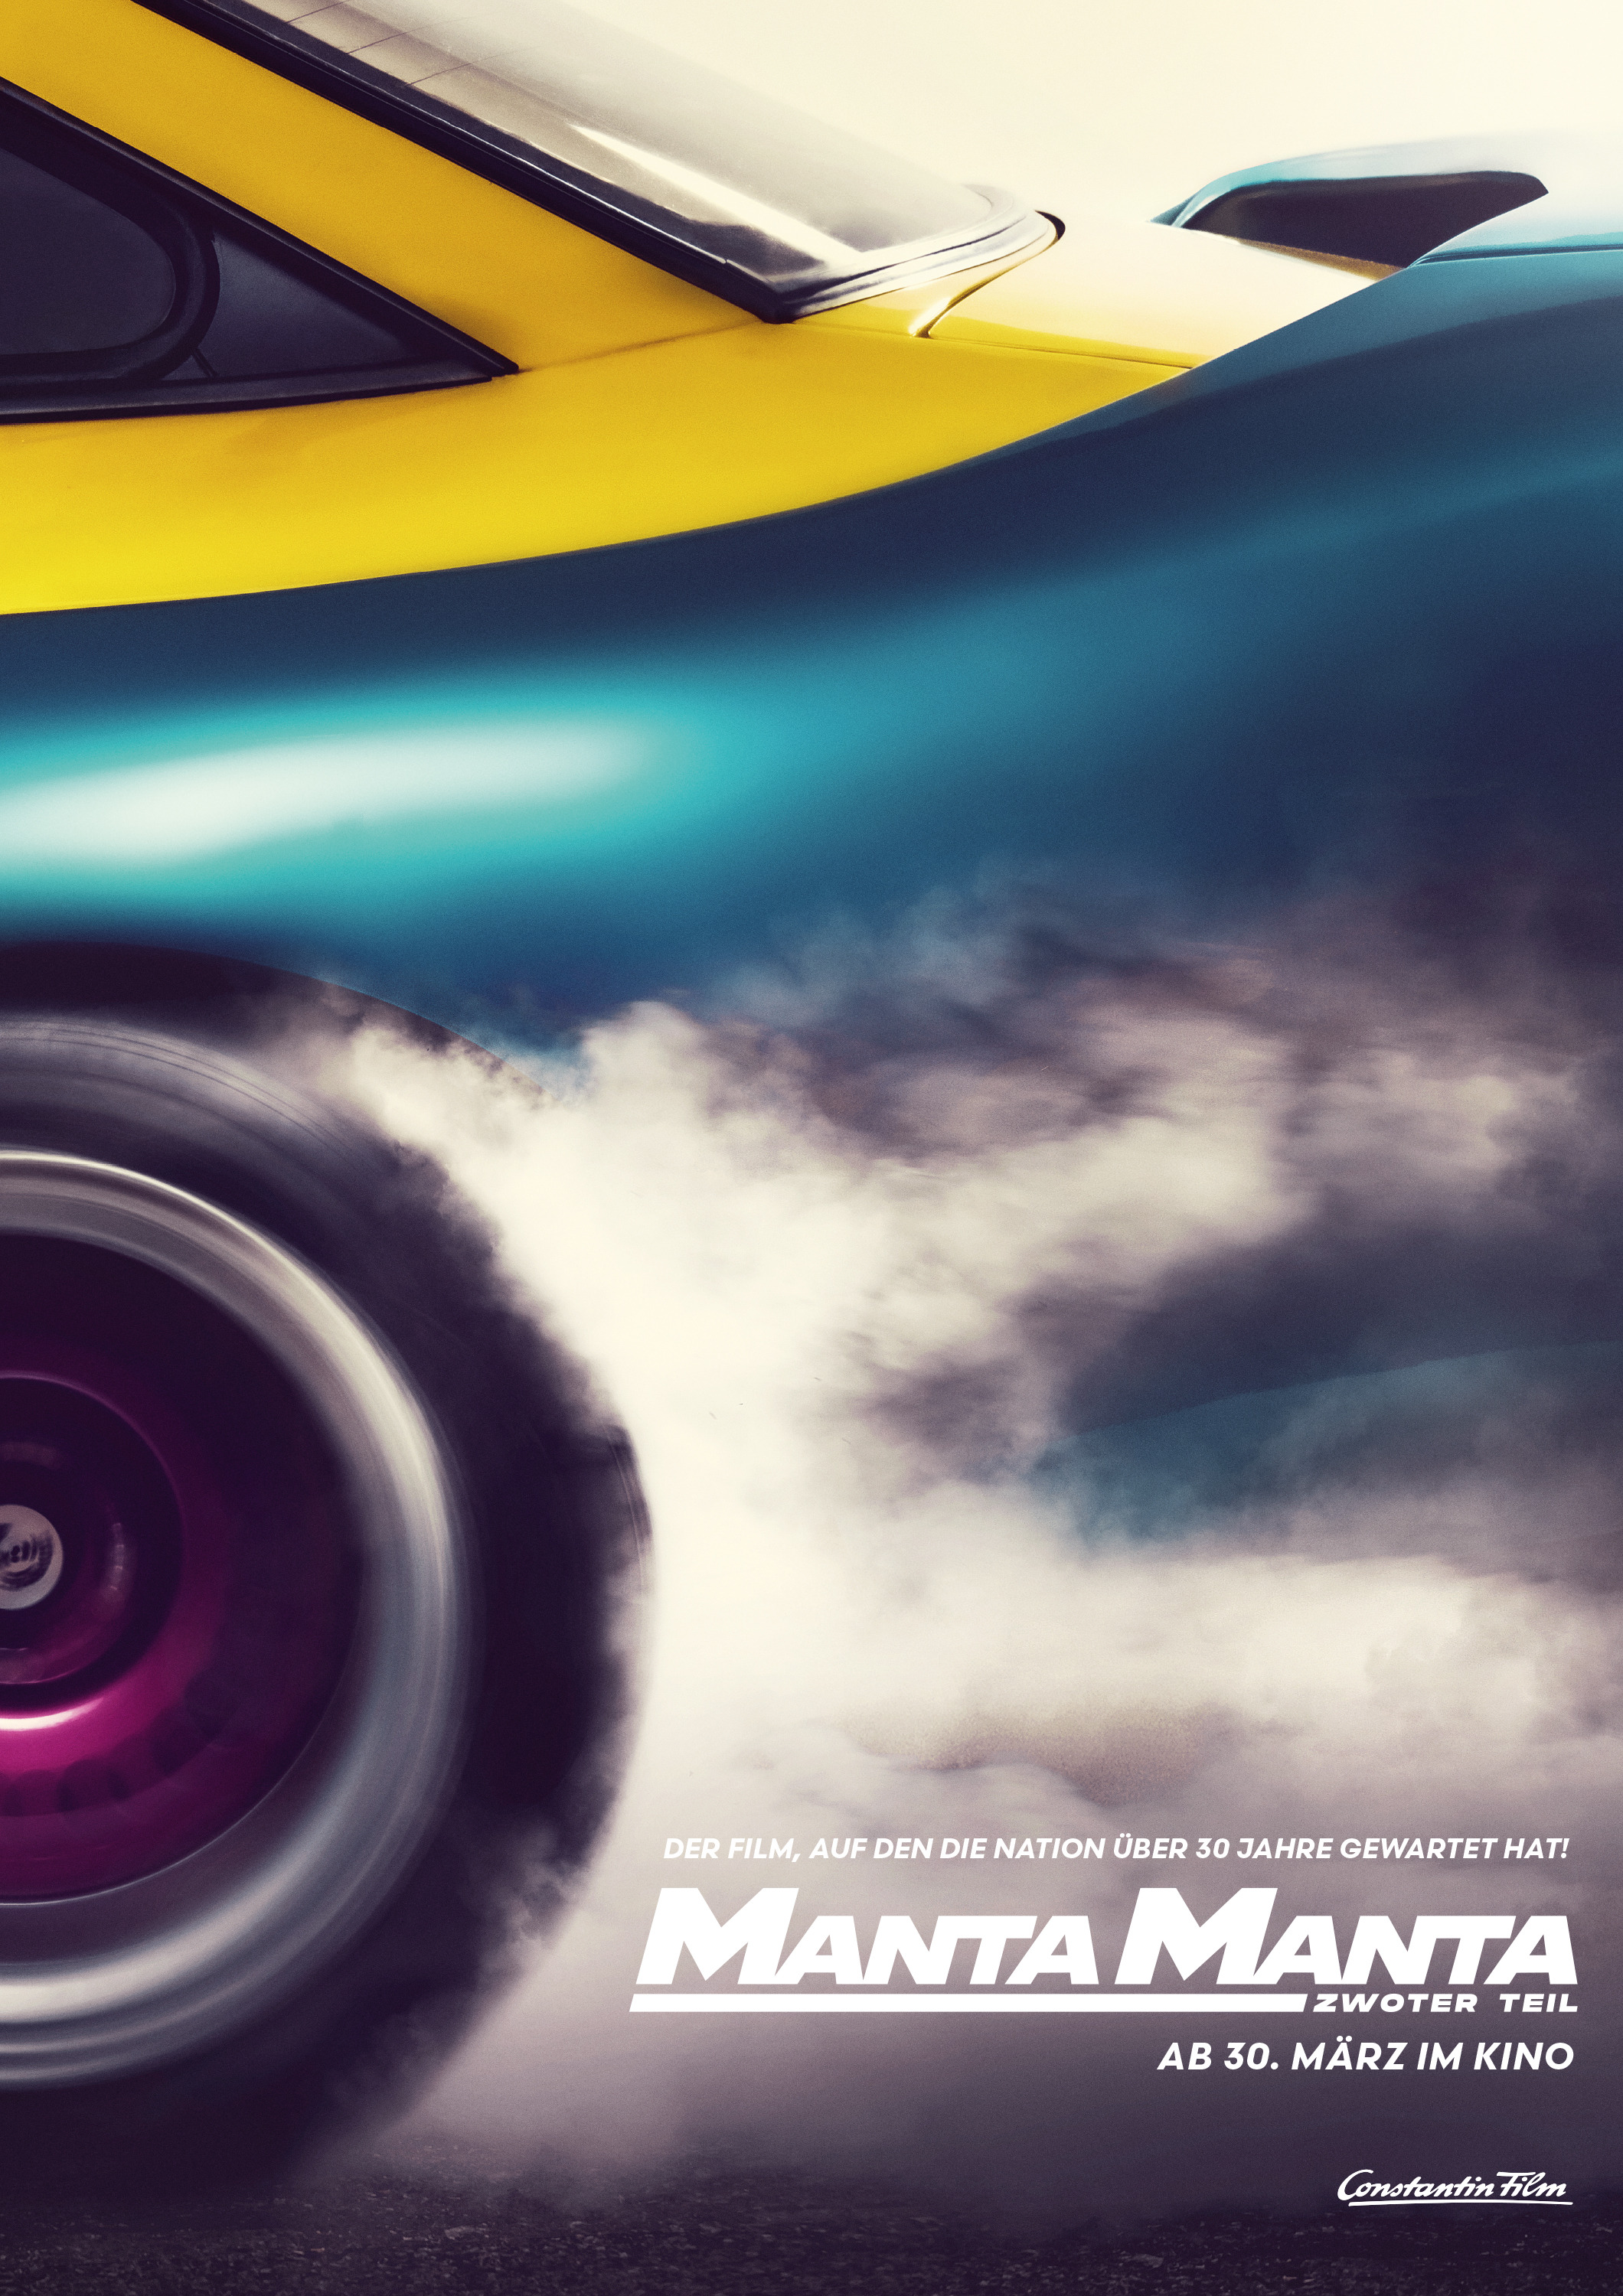 Mega Sized Movie Poster Image for Manta, Manta - Zwoter Teil (#3 of 5)